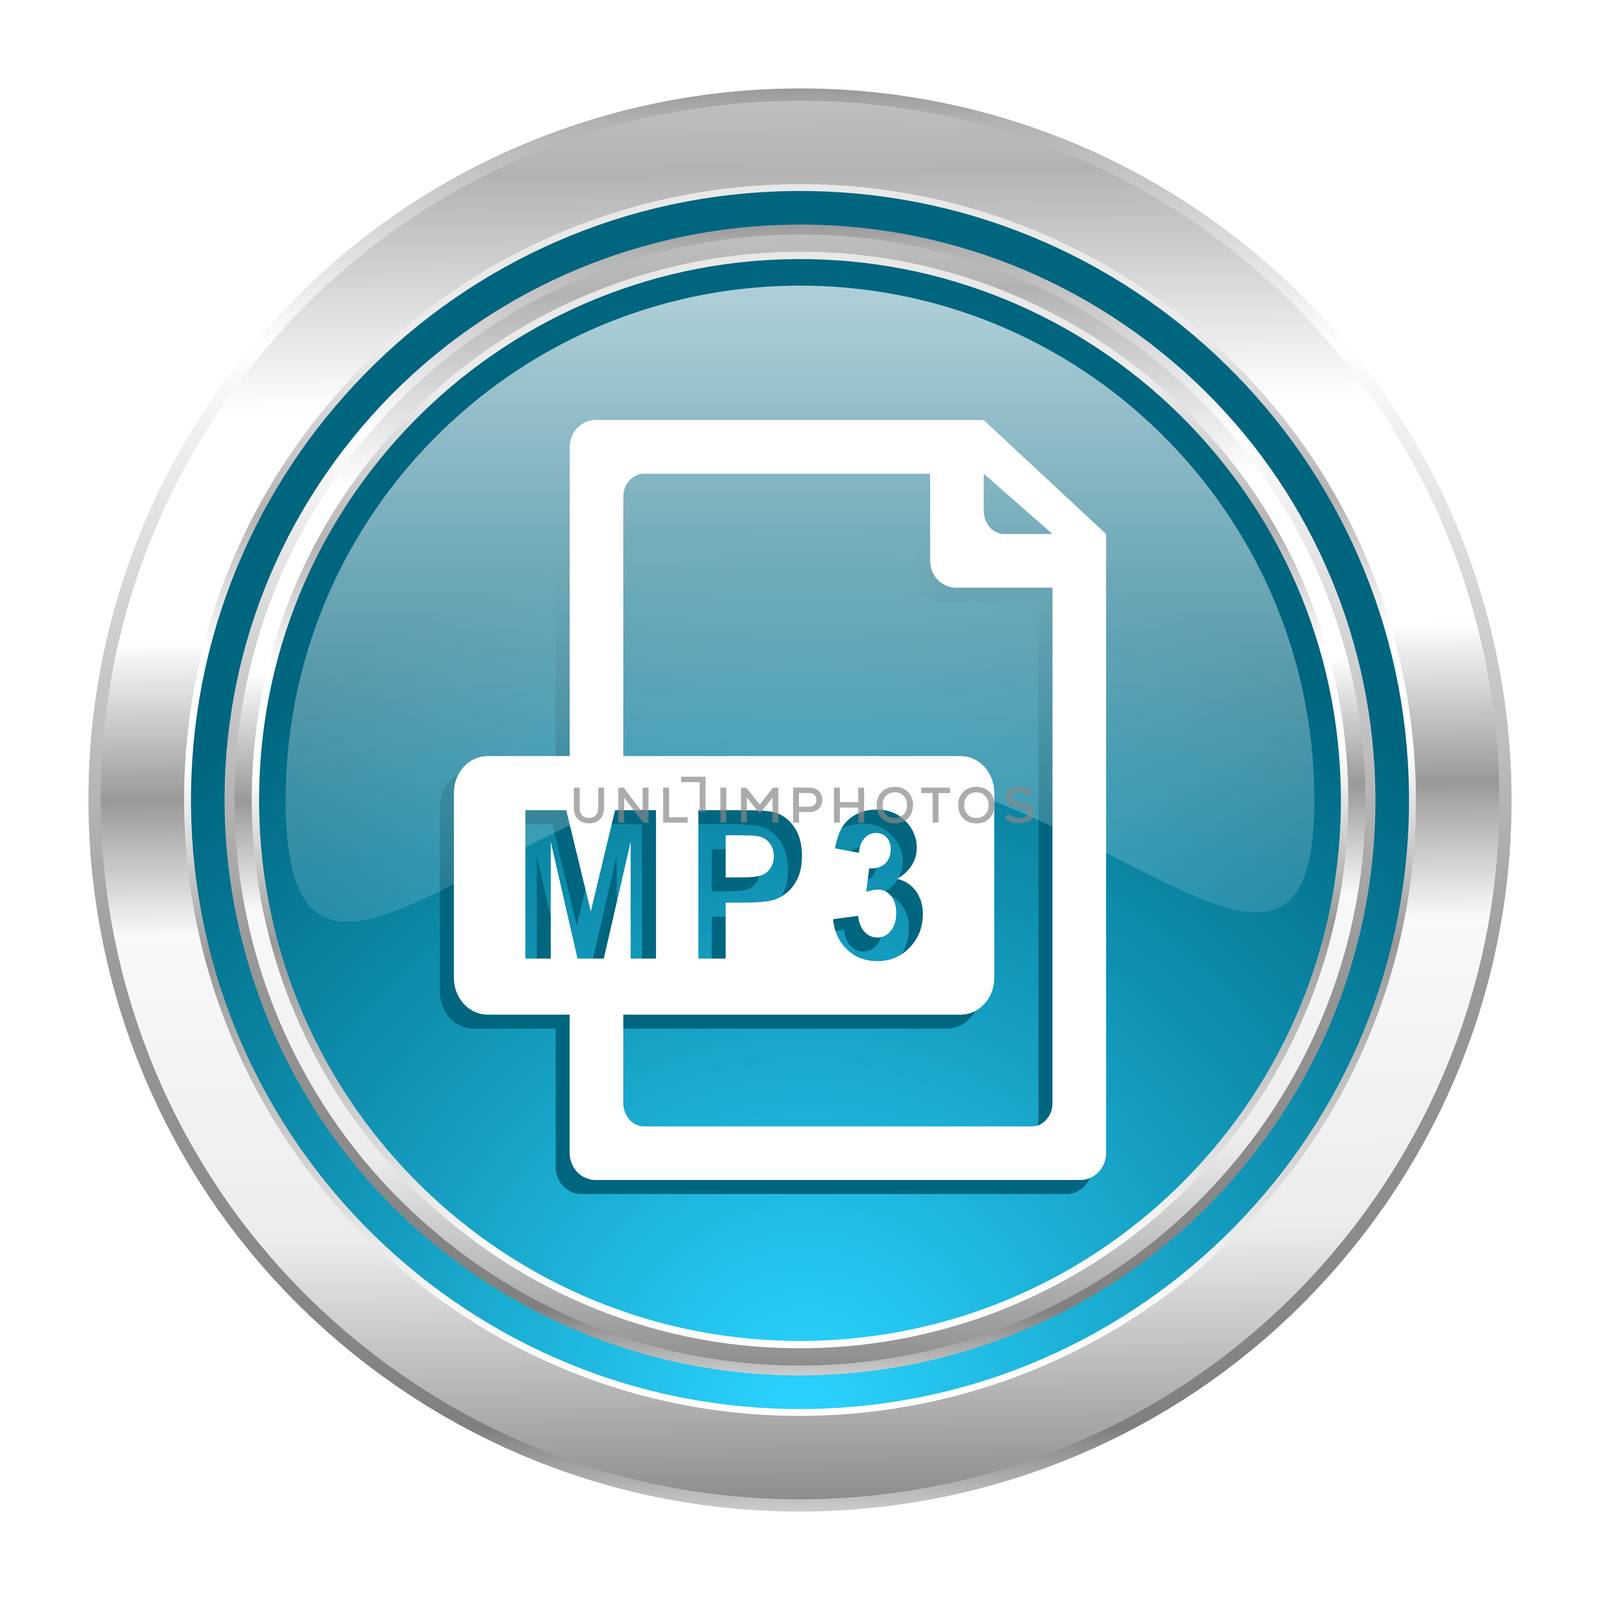 mp3 file icon by alexwhite